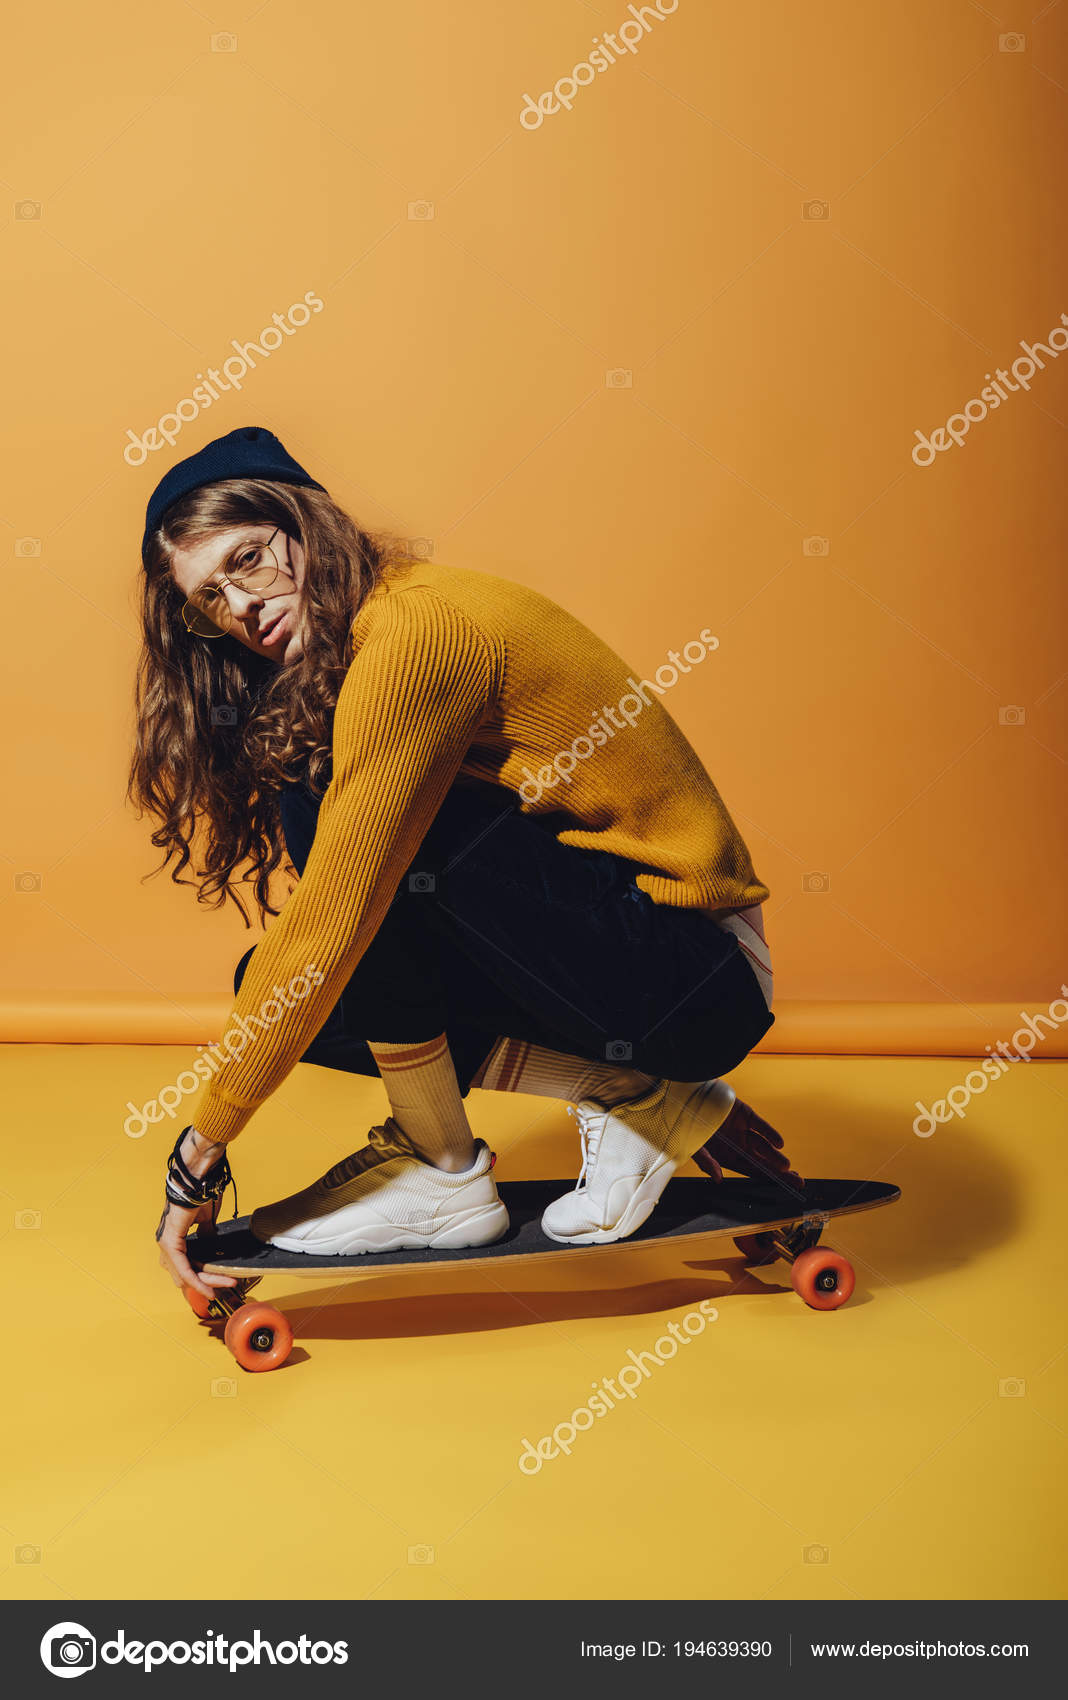 Skateboarder Long Hair Sitting Longboard Yellow Stock Photo ©Y-Boychenko 194639390